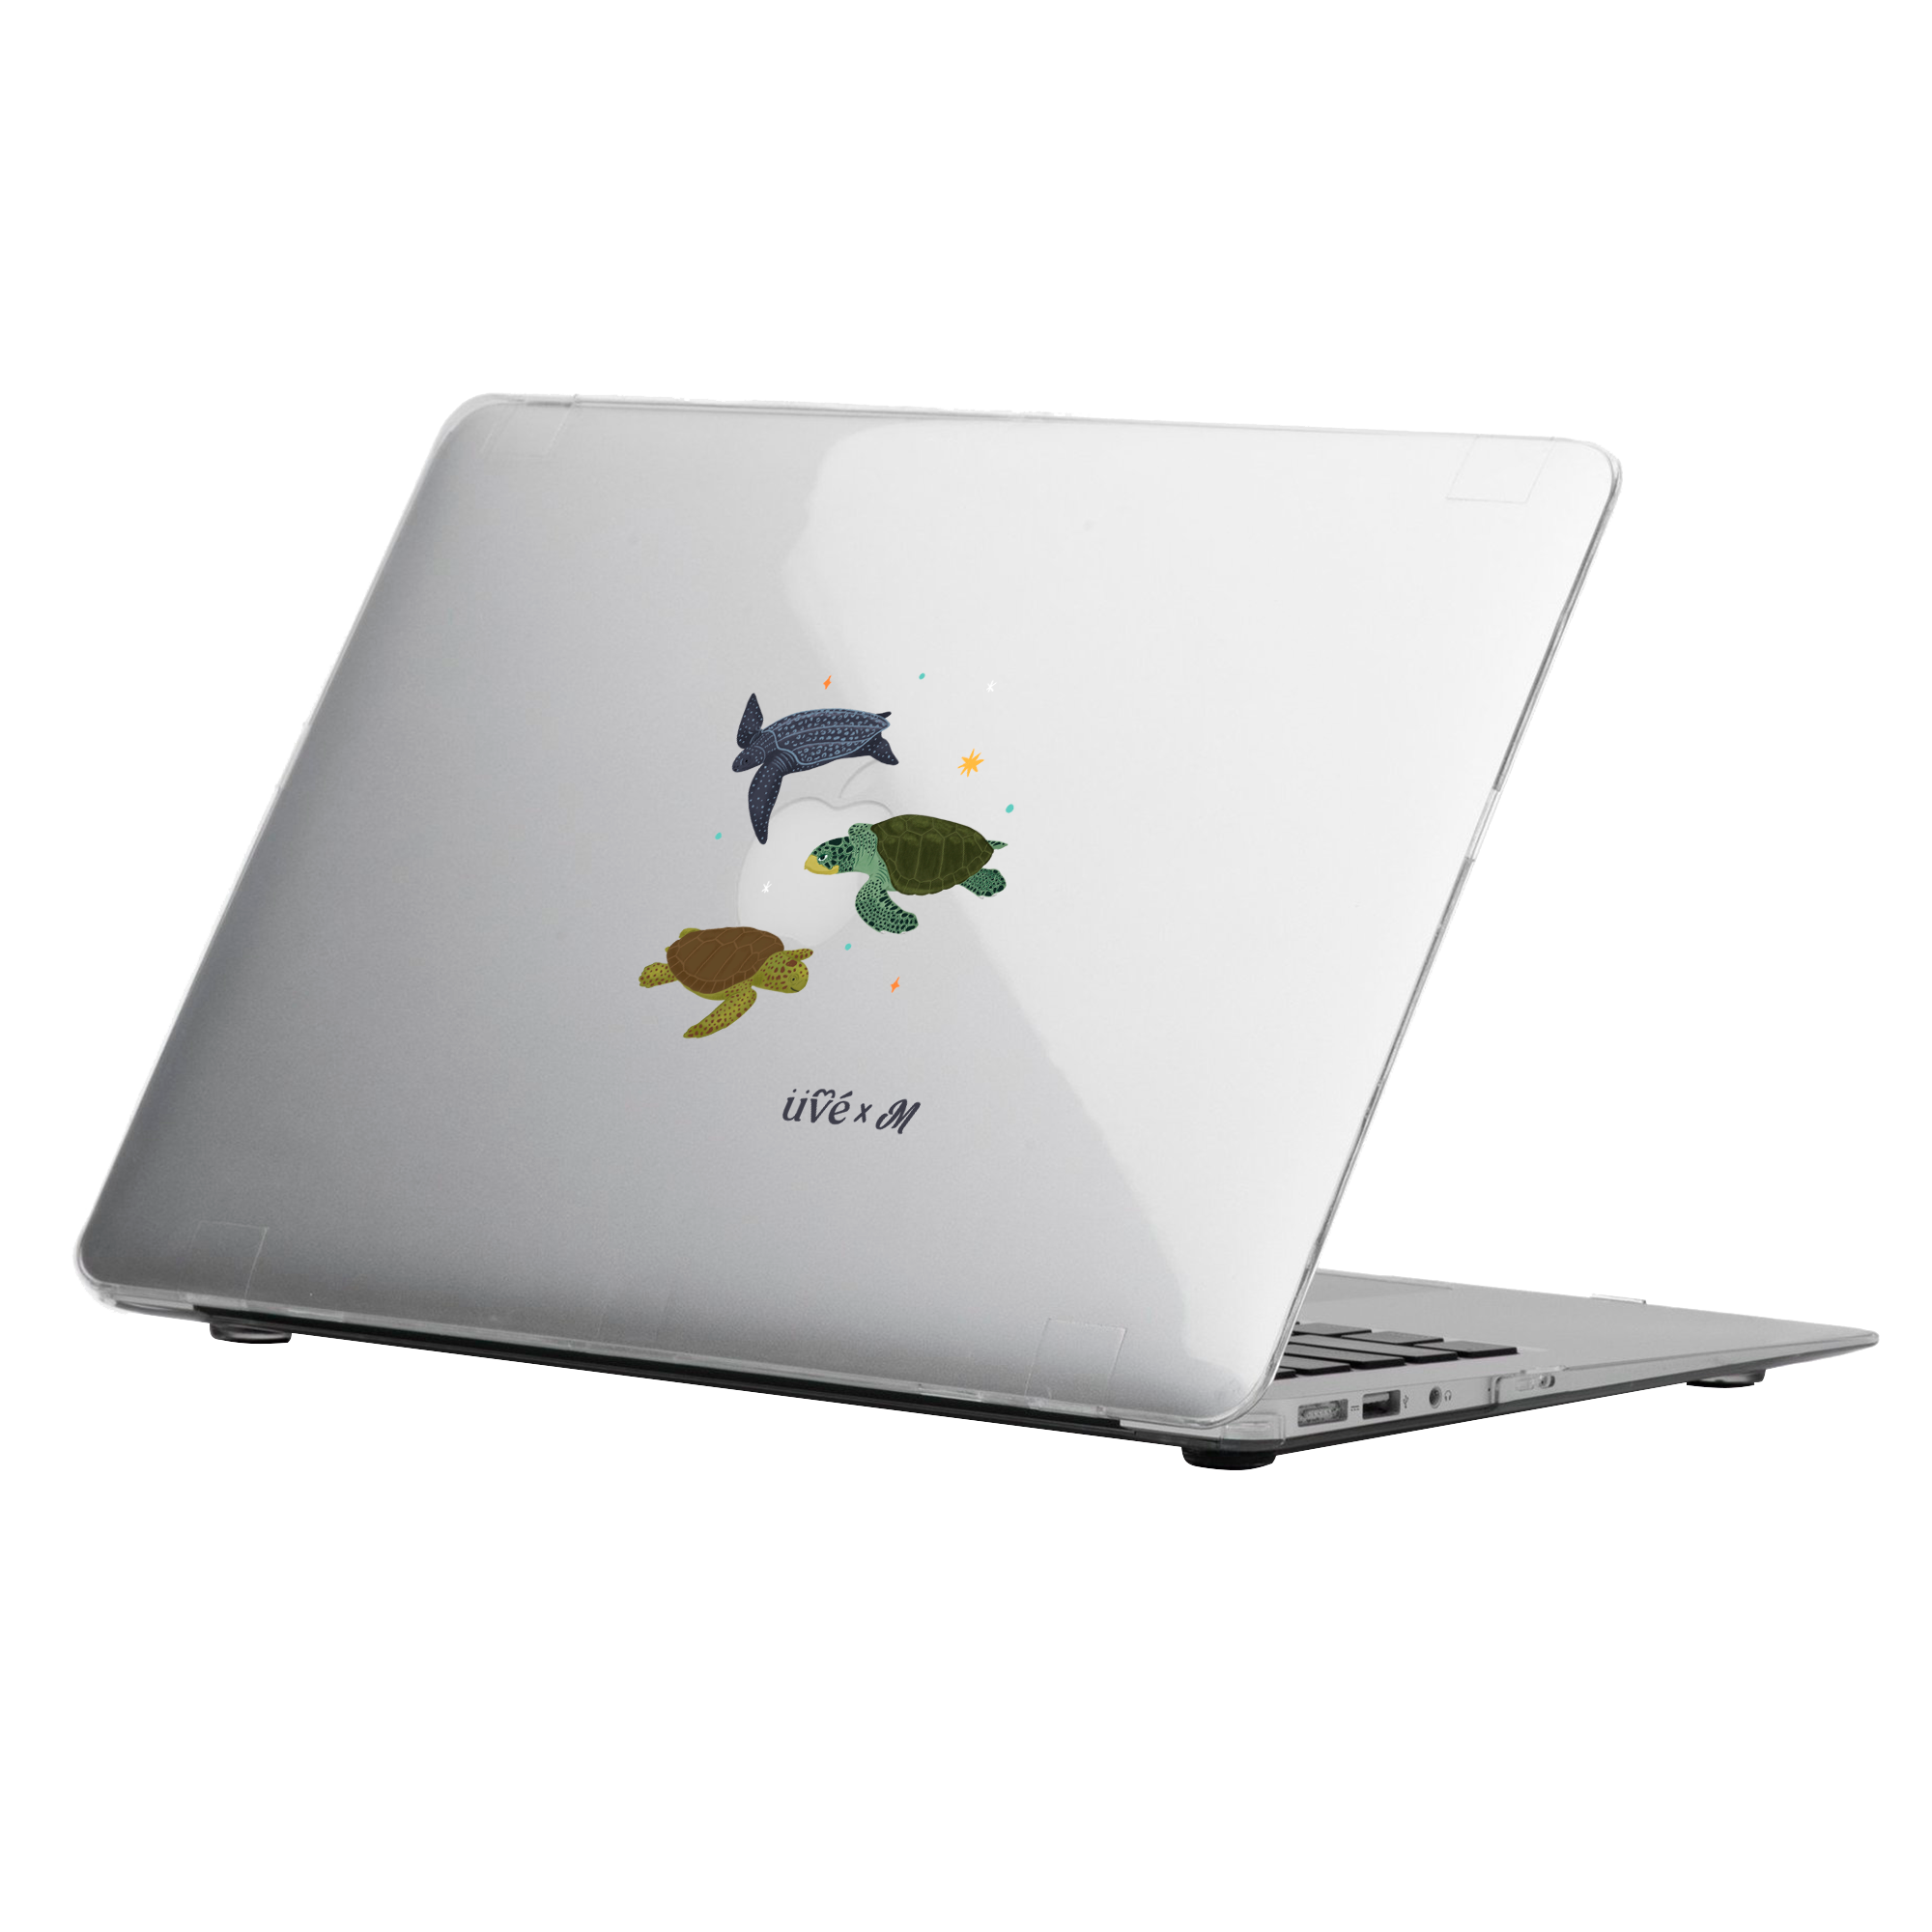 Tortugas MacBook Case - Mandala Cases